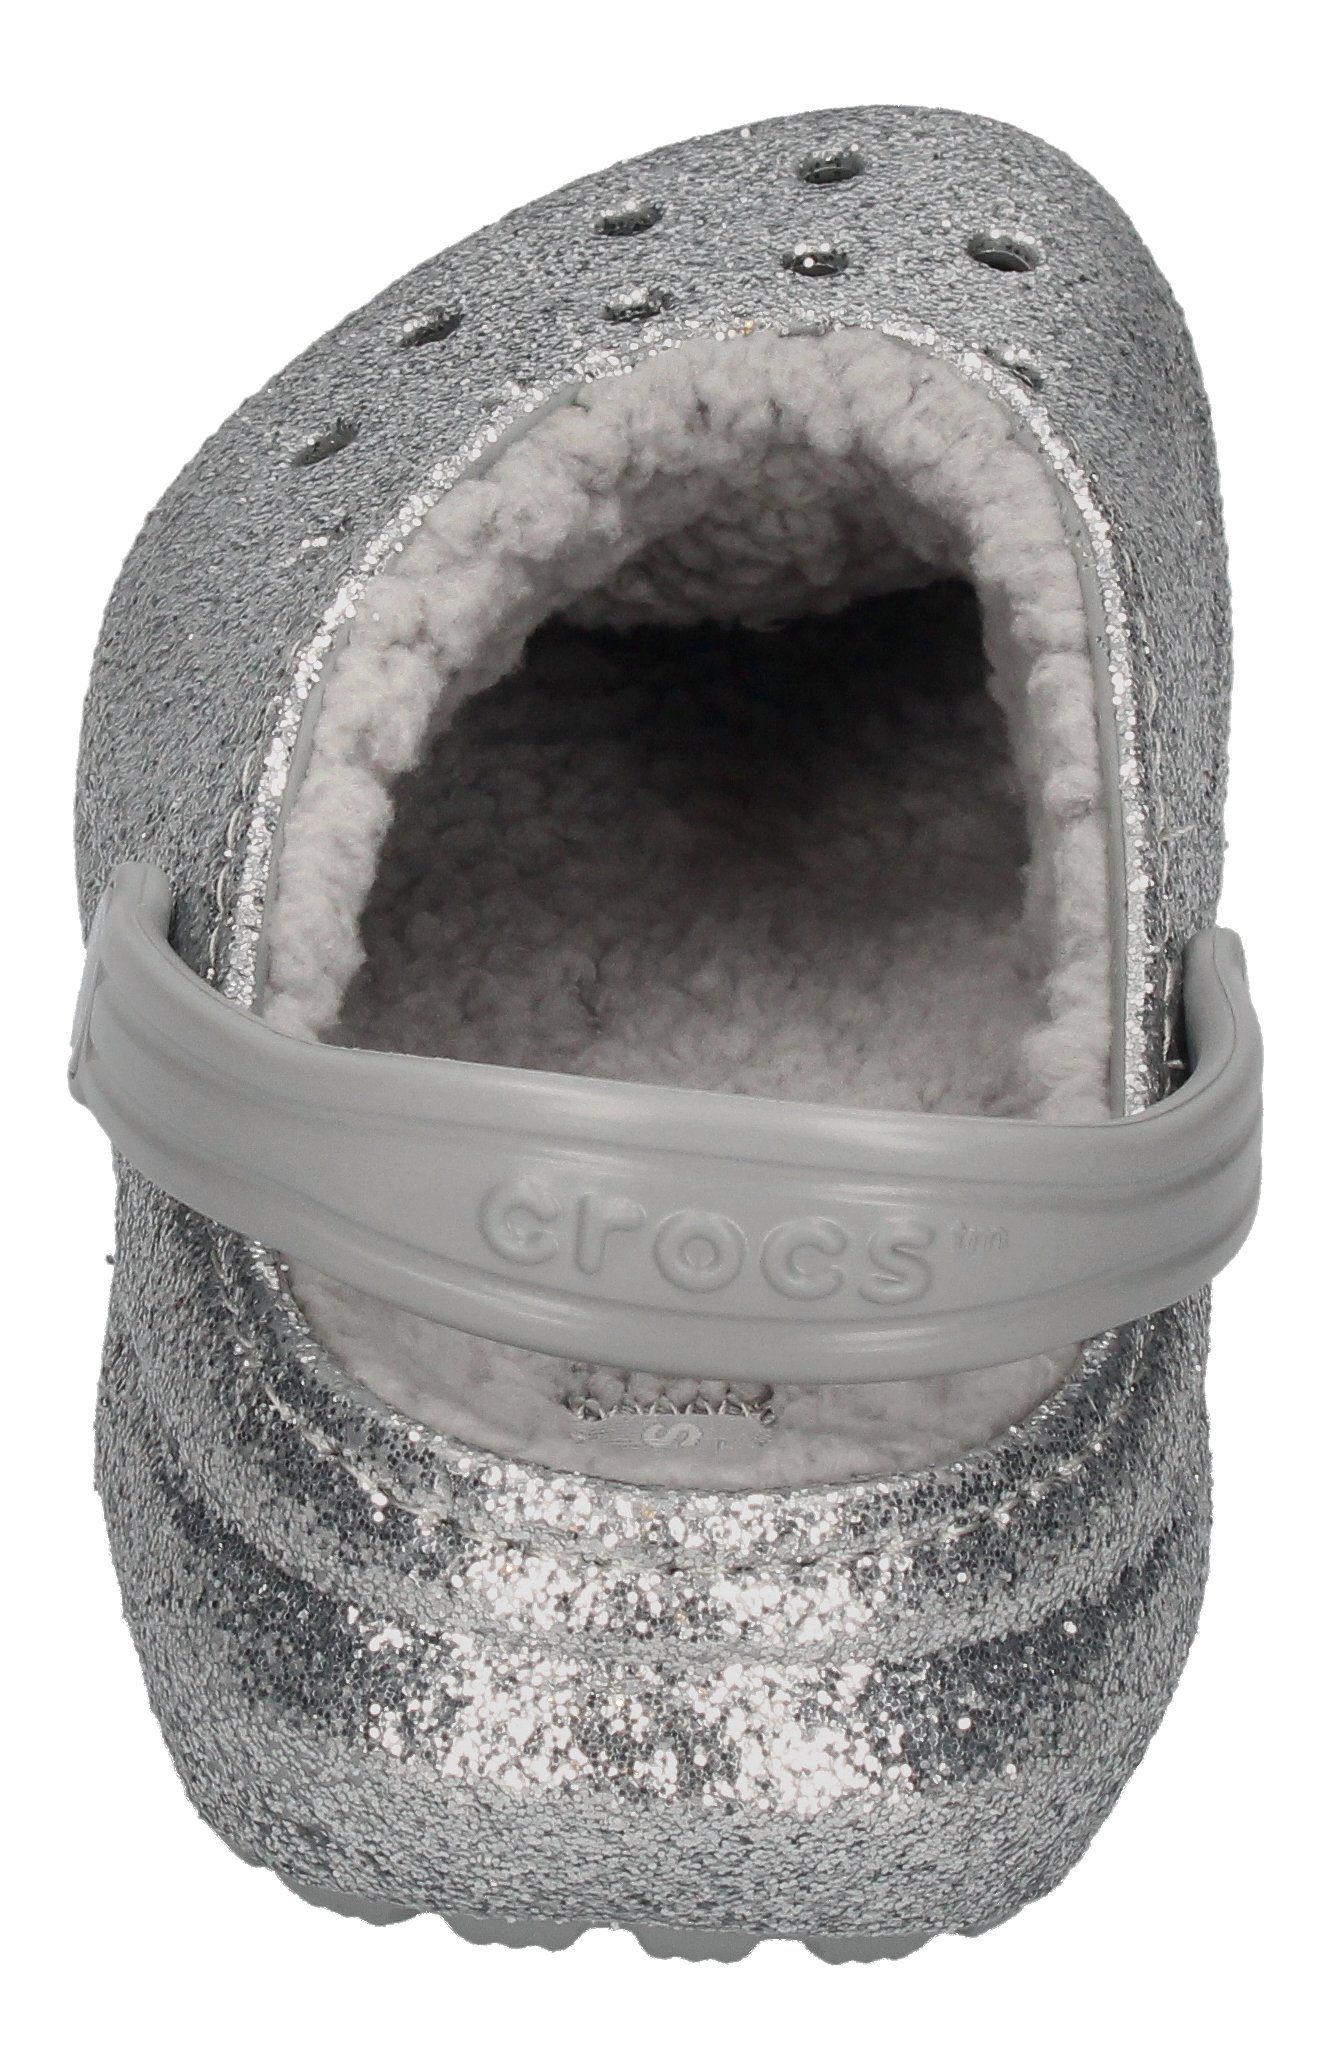 Classic Crocs Lined 207462-00N Clog Silver Hausschuh Glitter